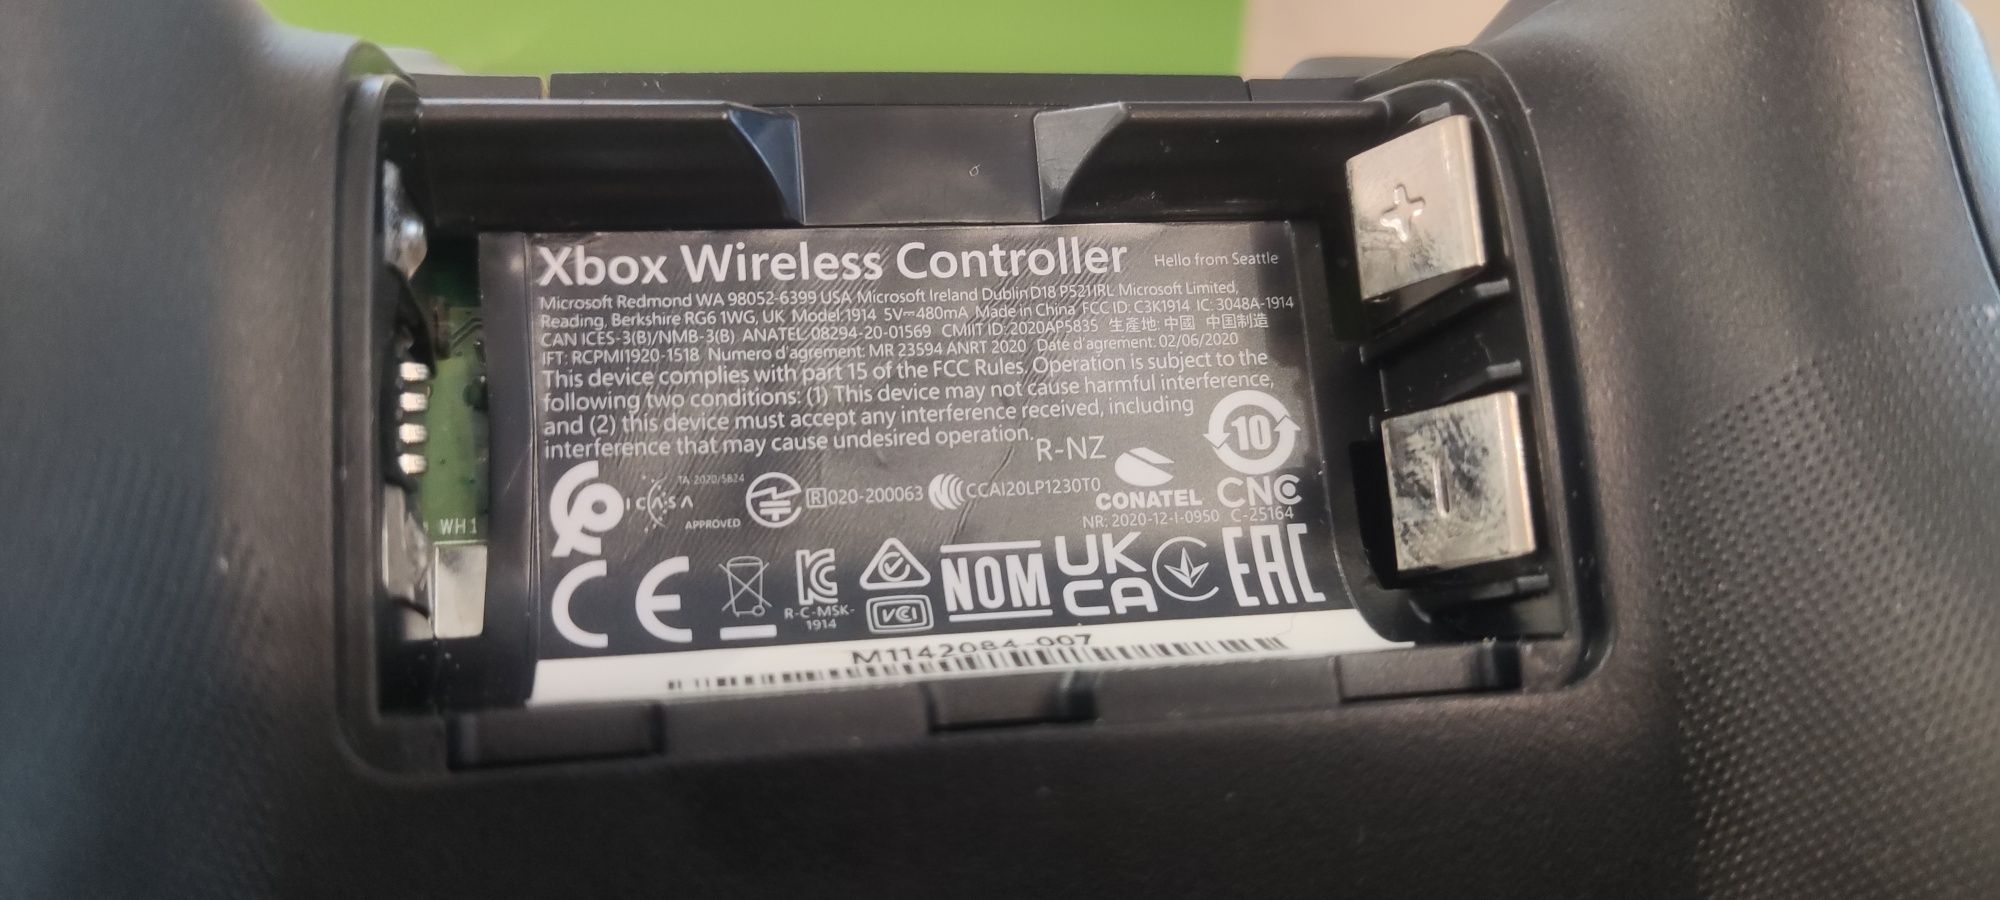 Pad Xbox Series S / X czarny